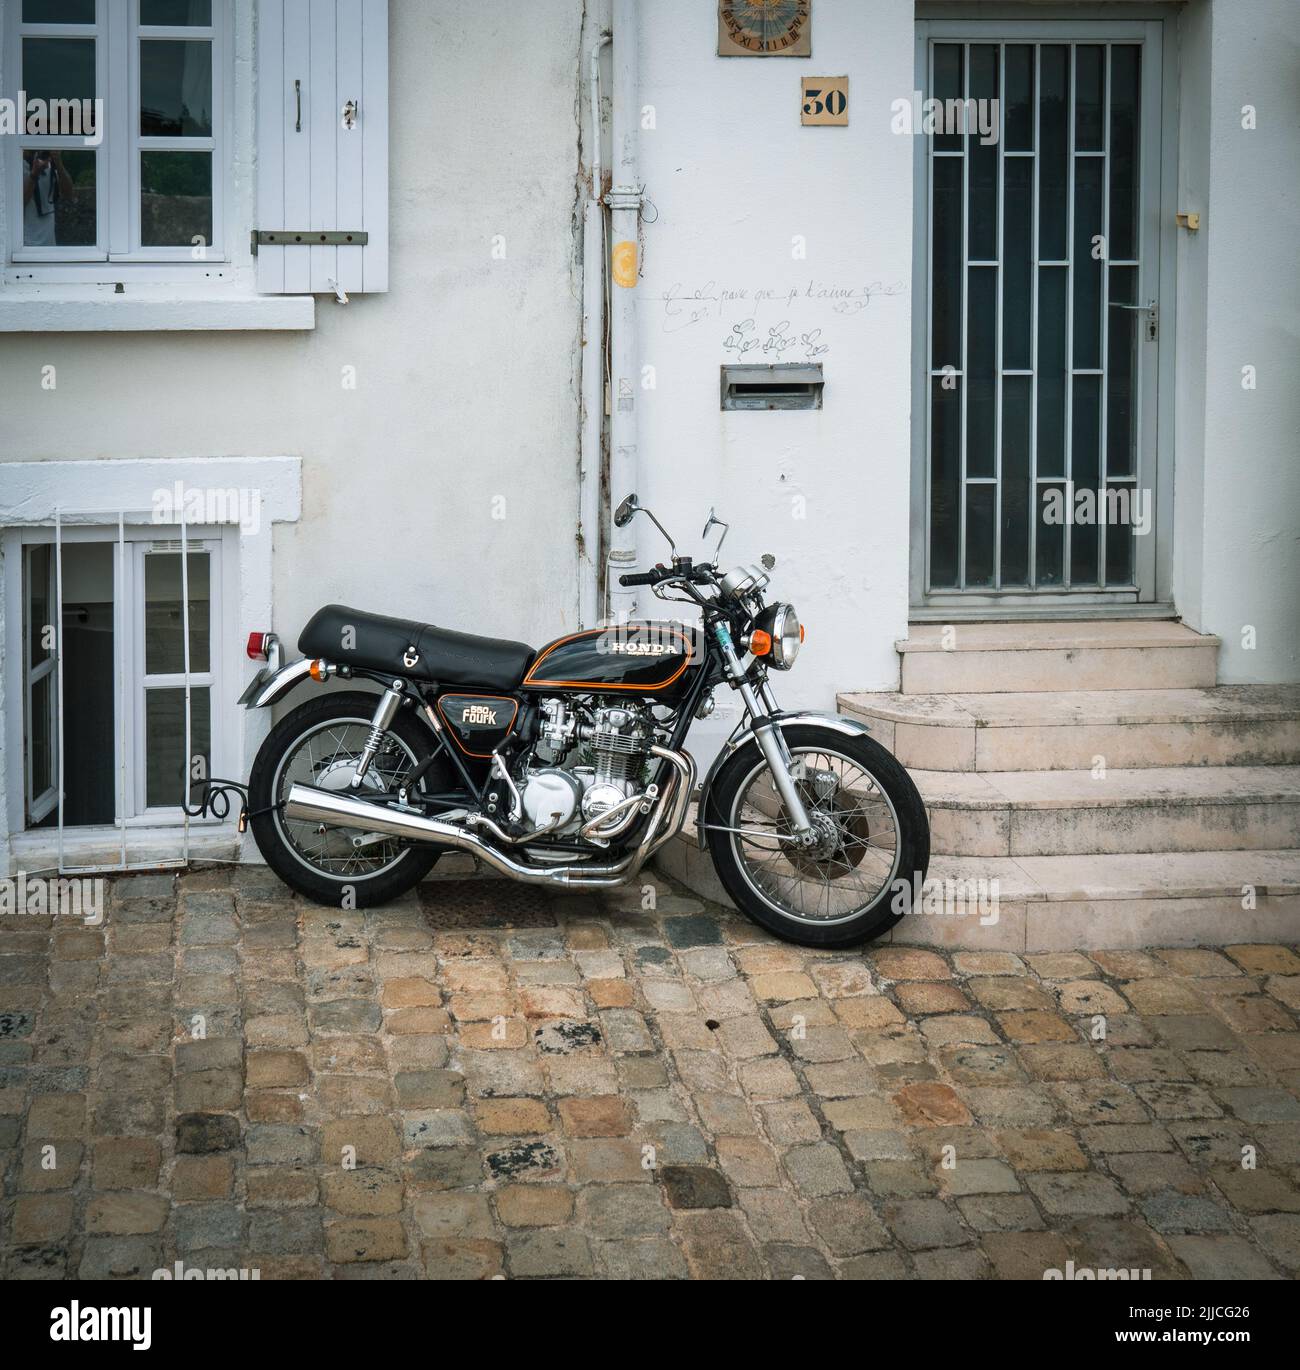 Roue avant d'une moto Honda vintage Photo Stock - Alamy